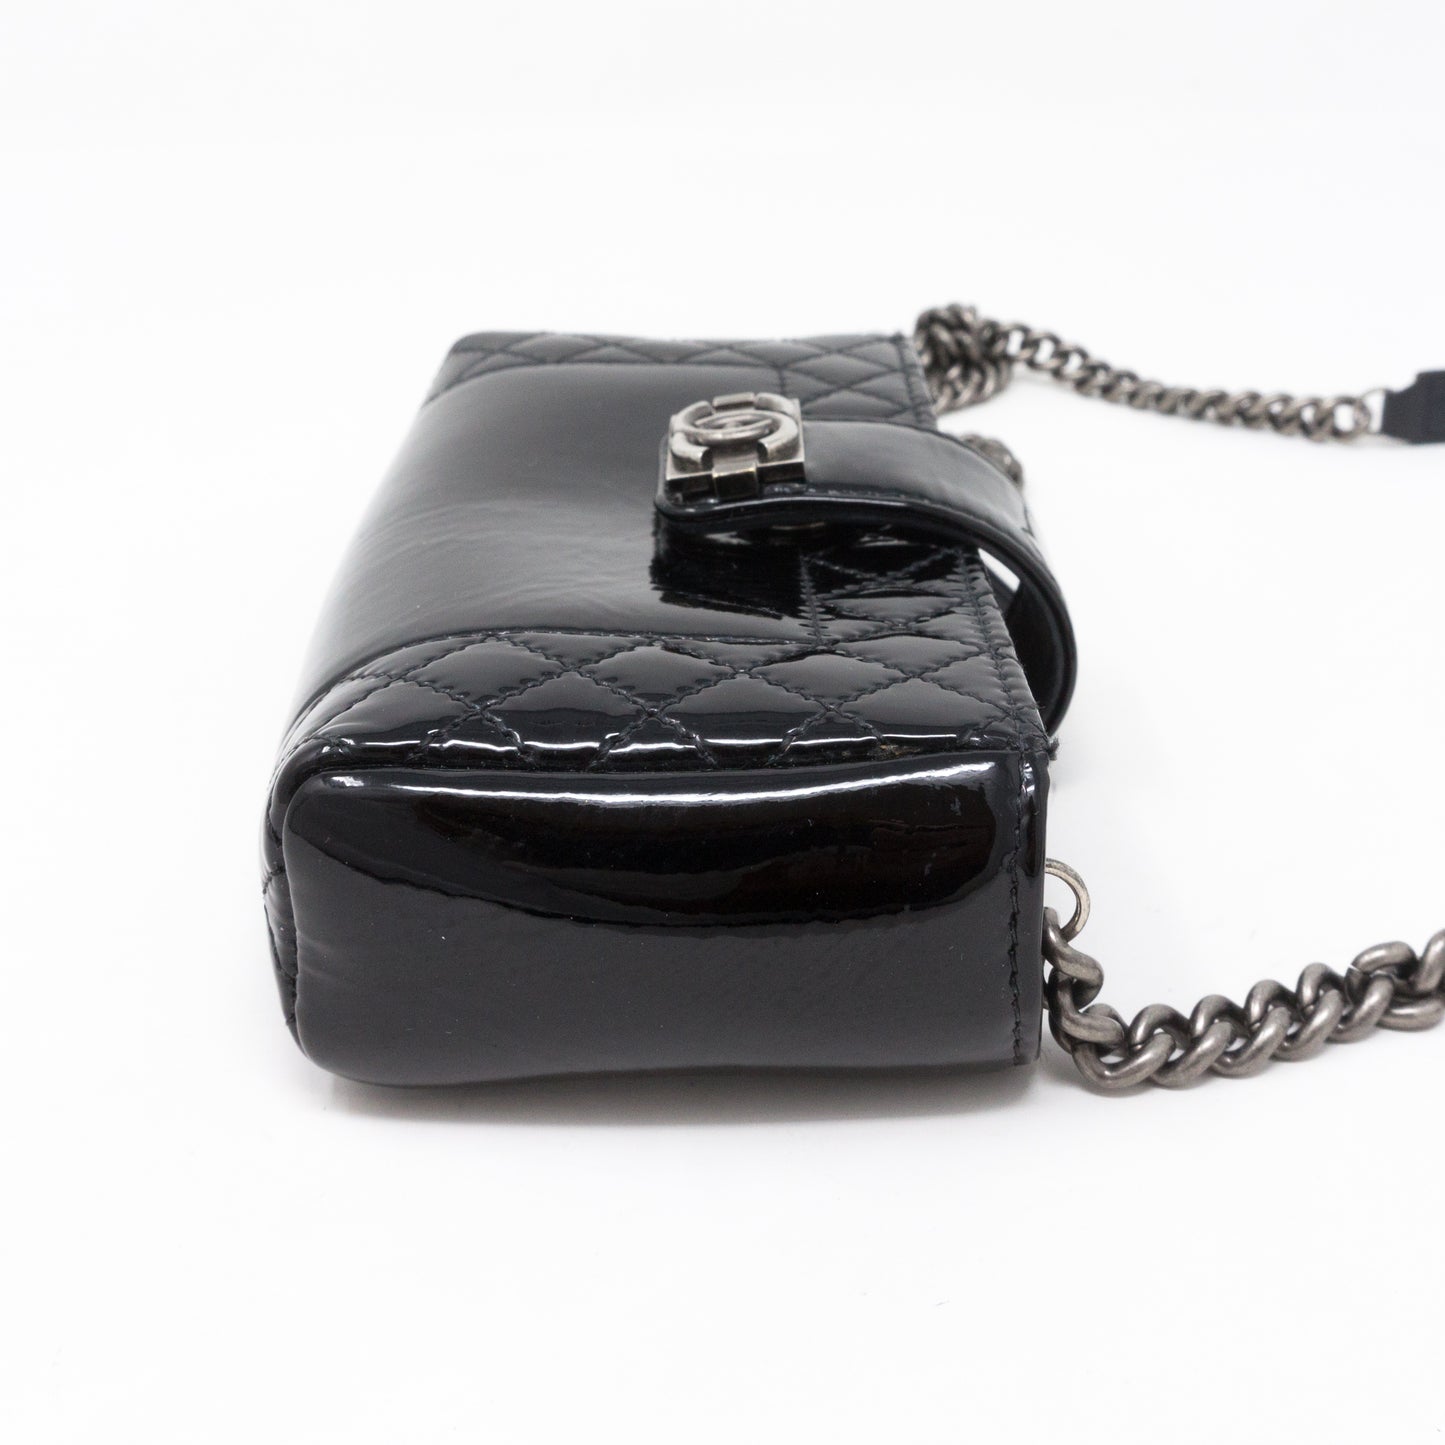 Mini Phone Holder Chain Black Patent Leather